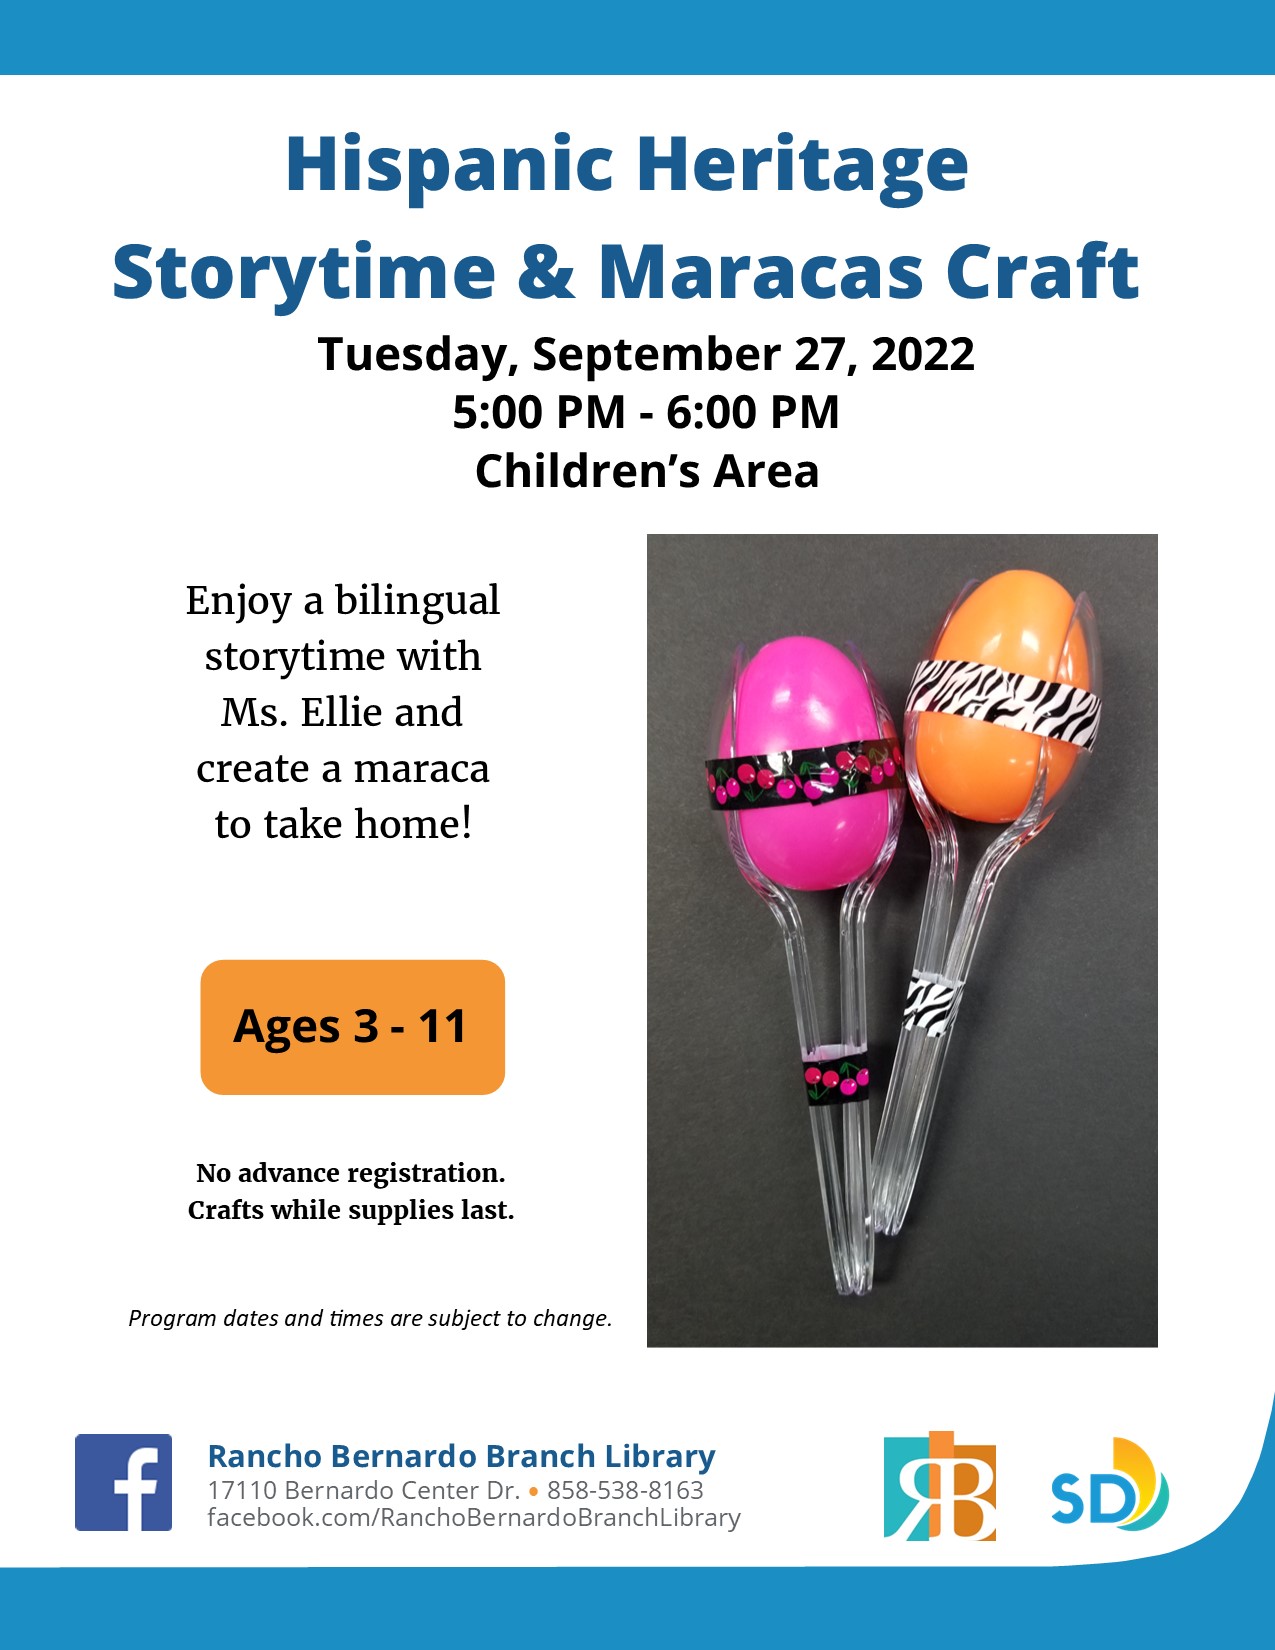 Hispanic Heritage Storytime and Maracas Craft